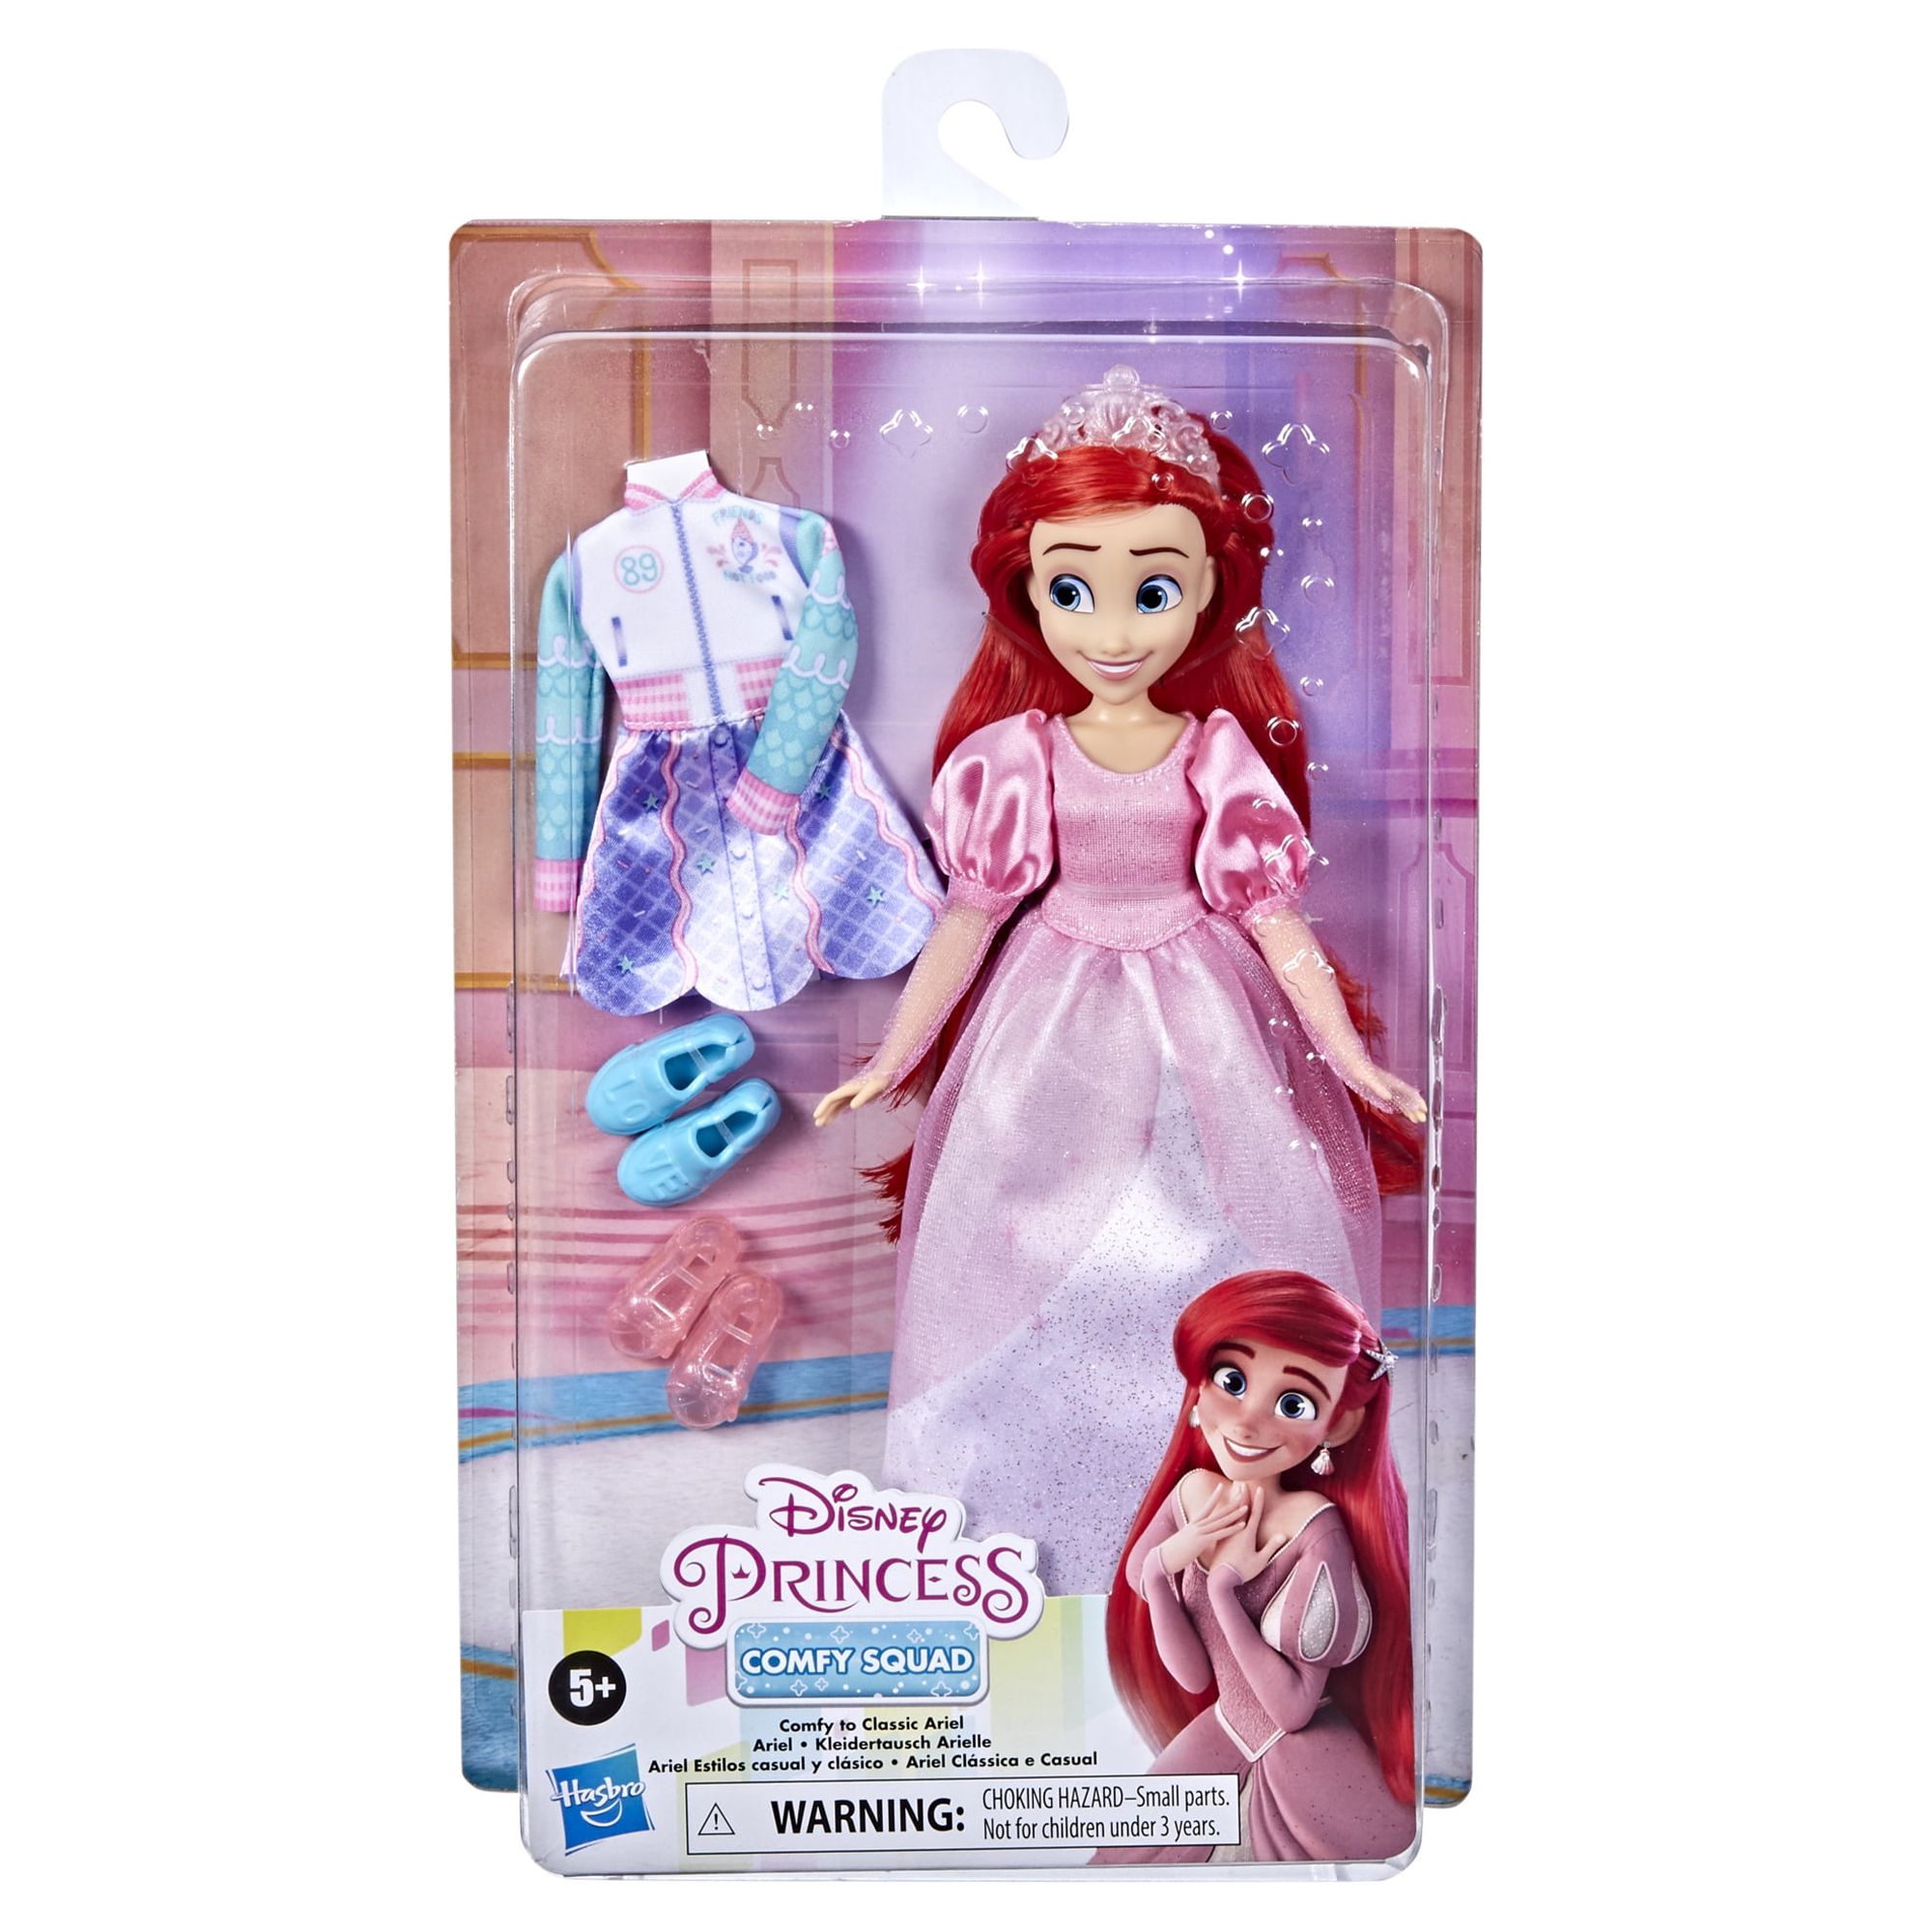 Disney Princess Comfy Squad Comfy to Classic Ariel Doll - image 3 of 6